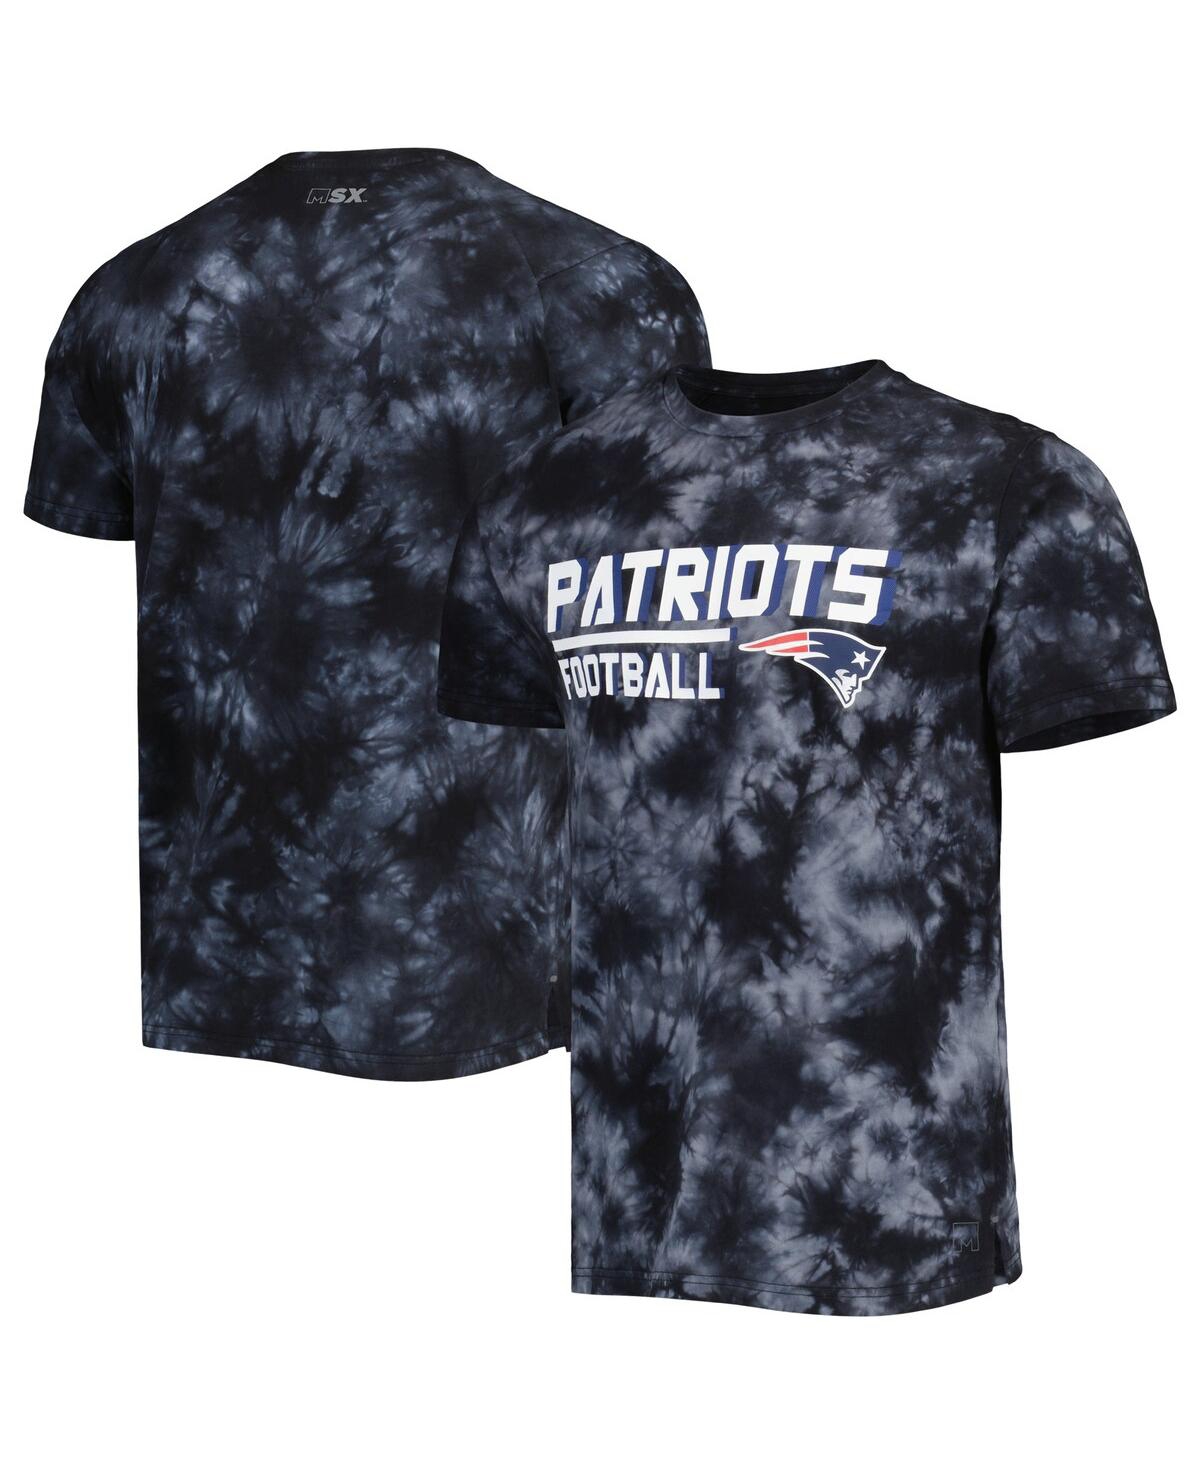 Men's Msx by Michael Strahan Black New England Patriots Recovery Tie-Dye T-shirt - Black